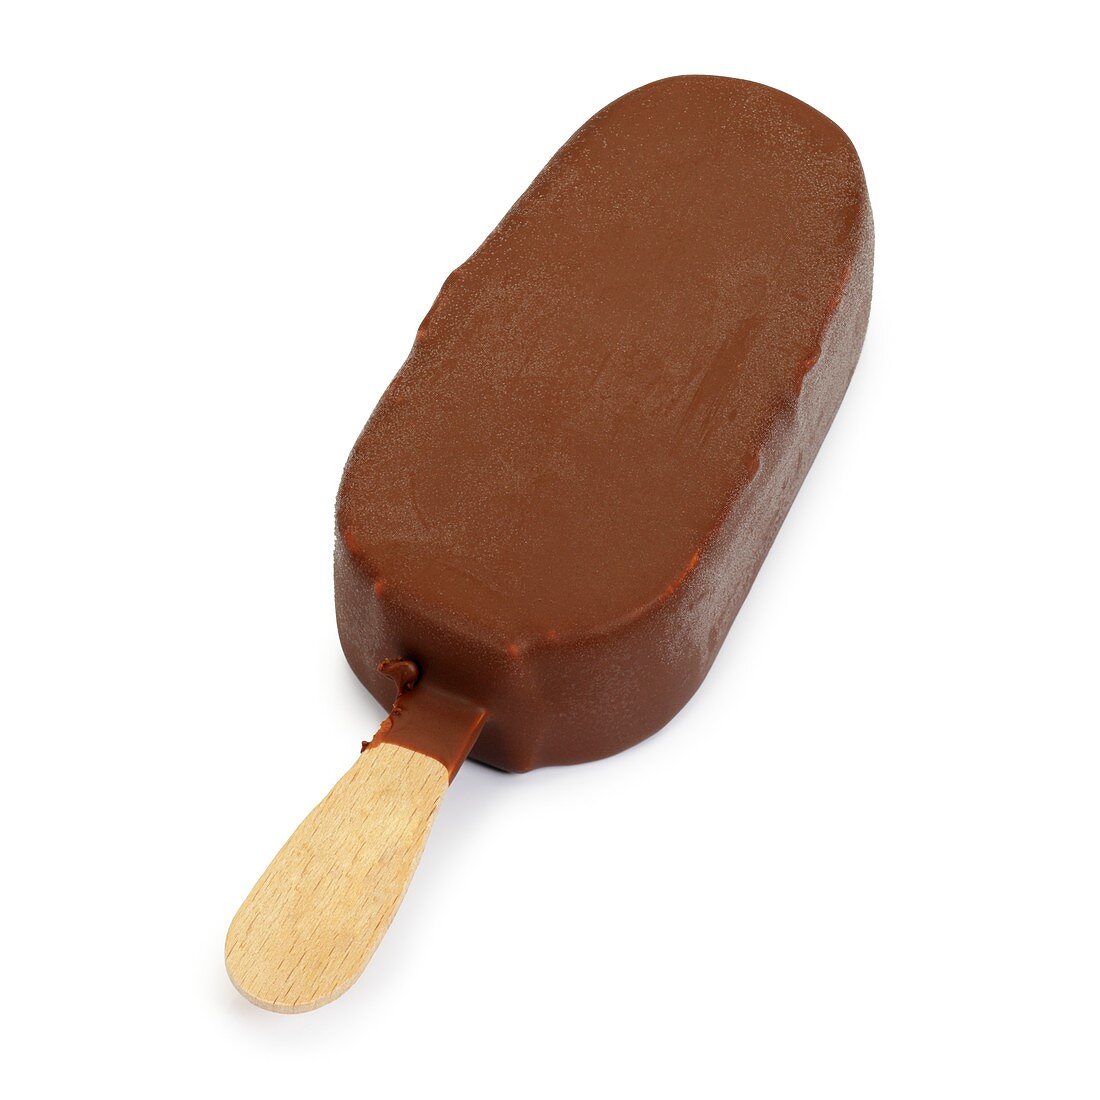 Chocolate covered ice cream